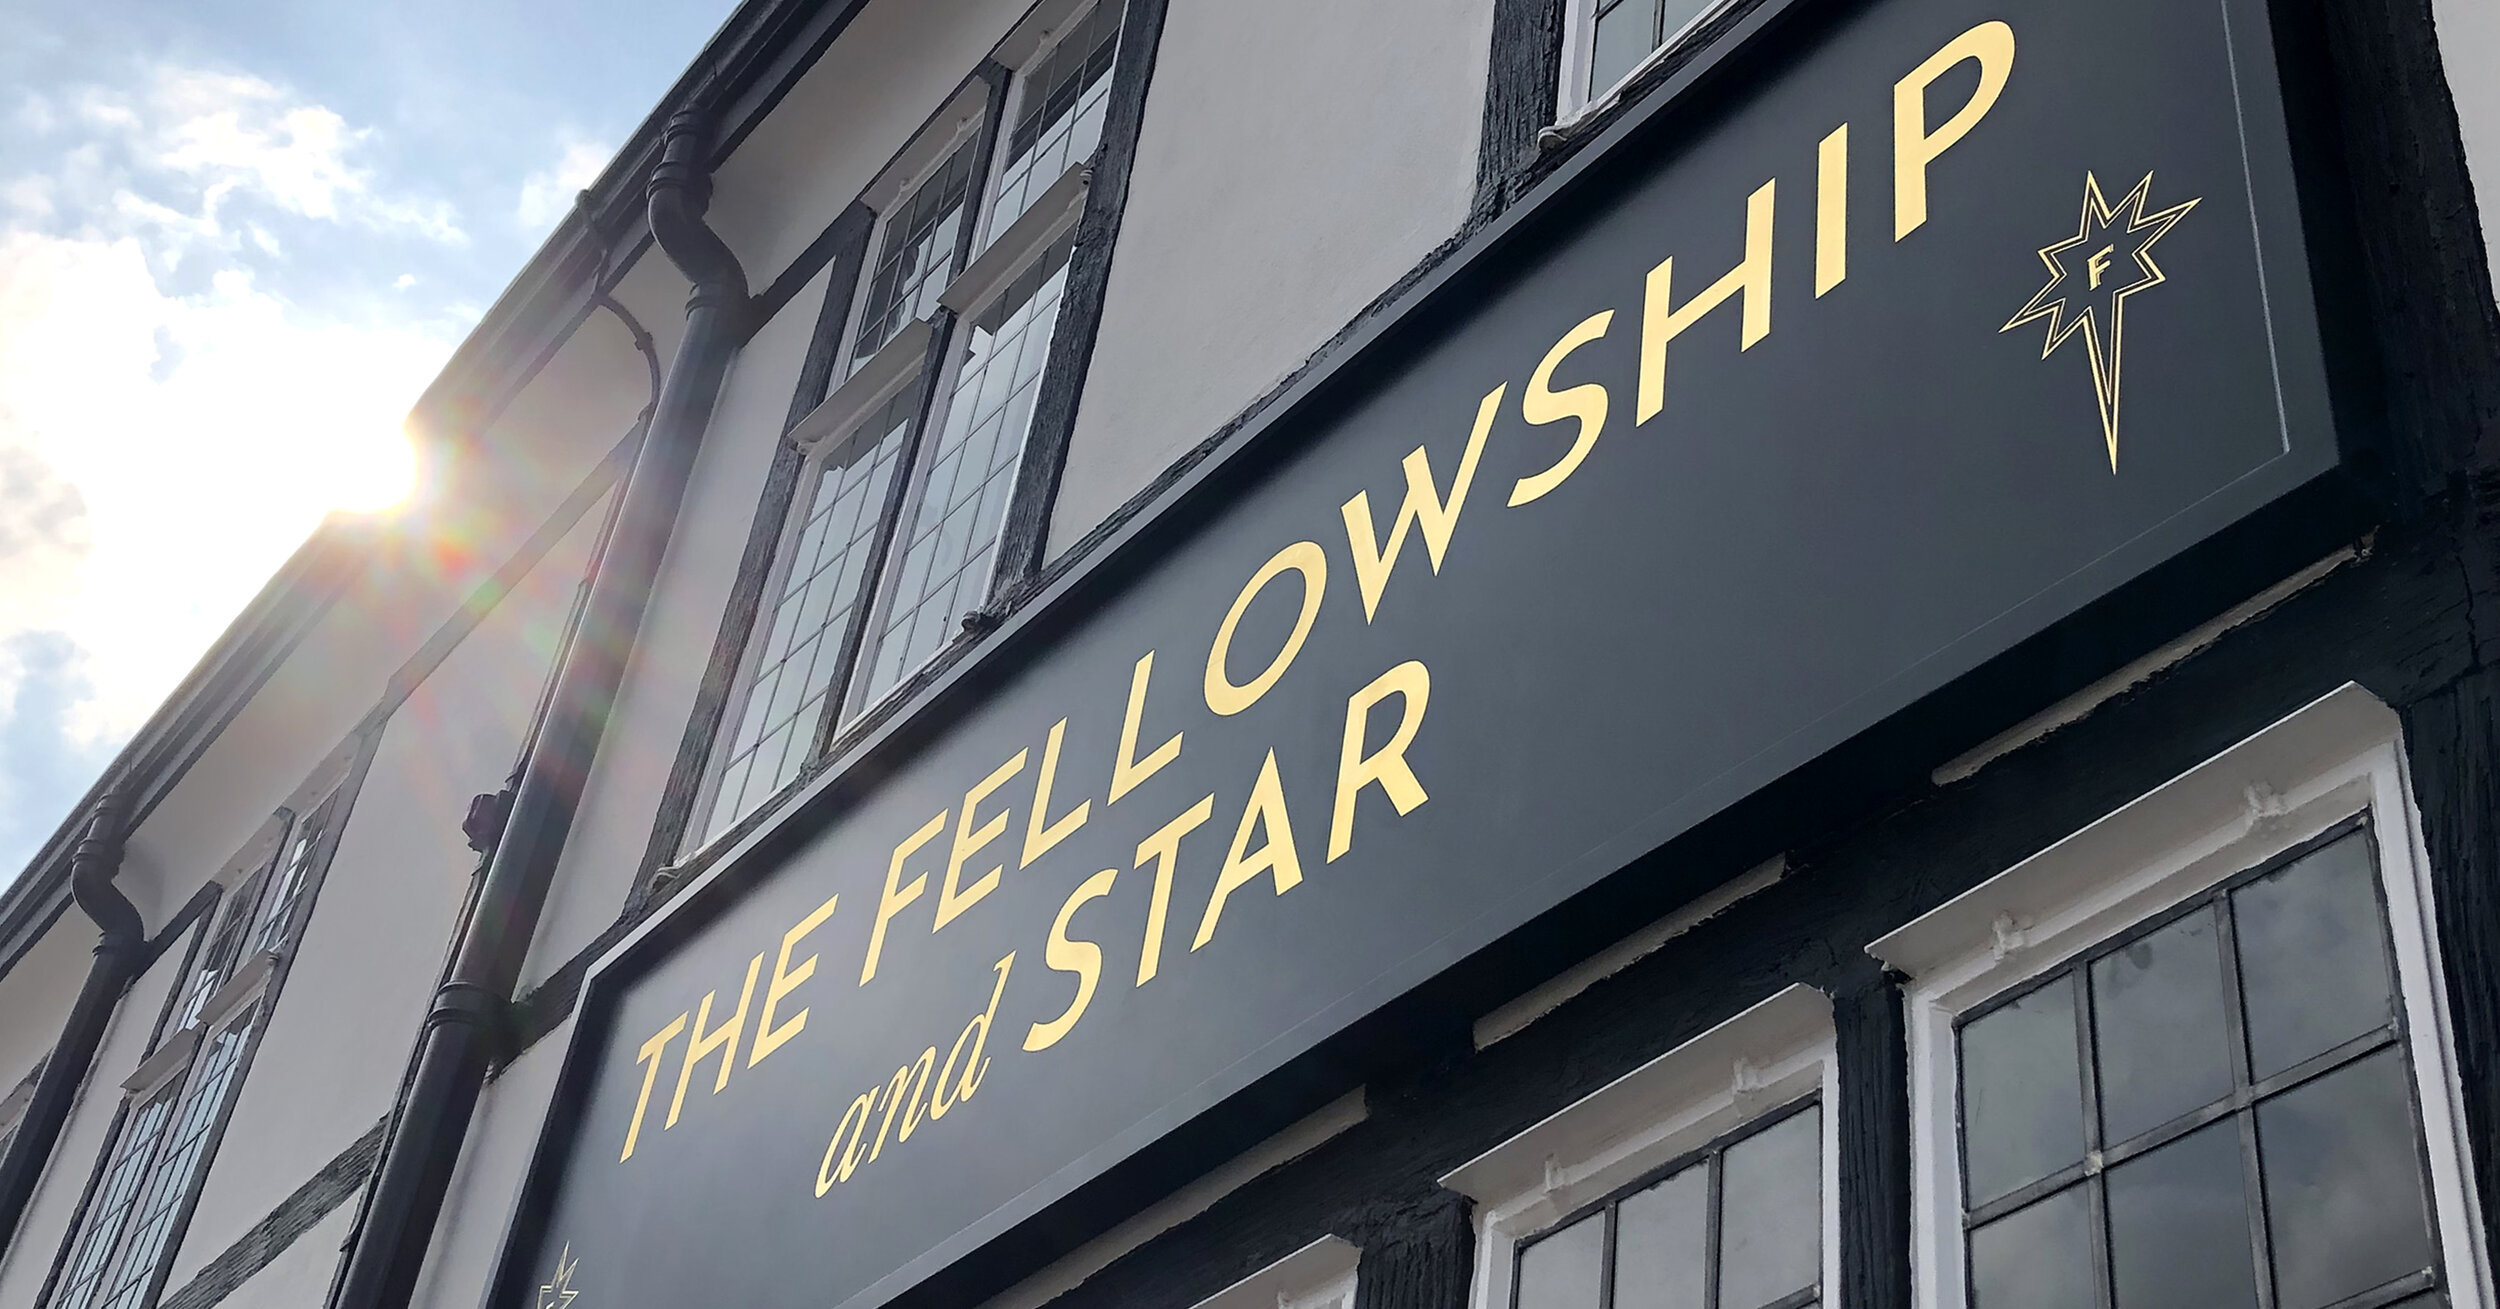 Fellowship and Star signage and wayfinding 02.jpg